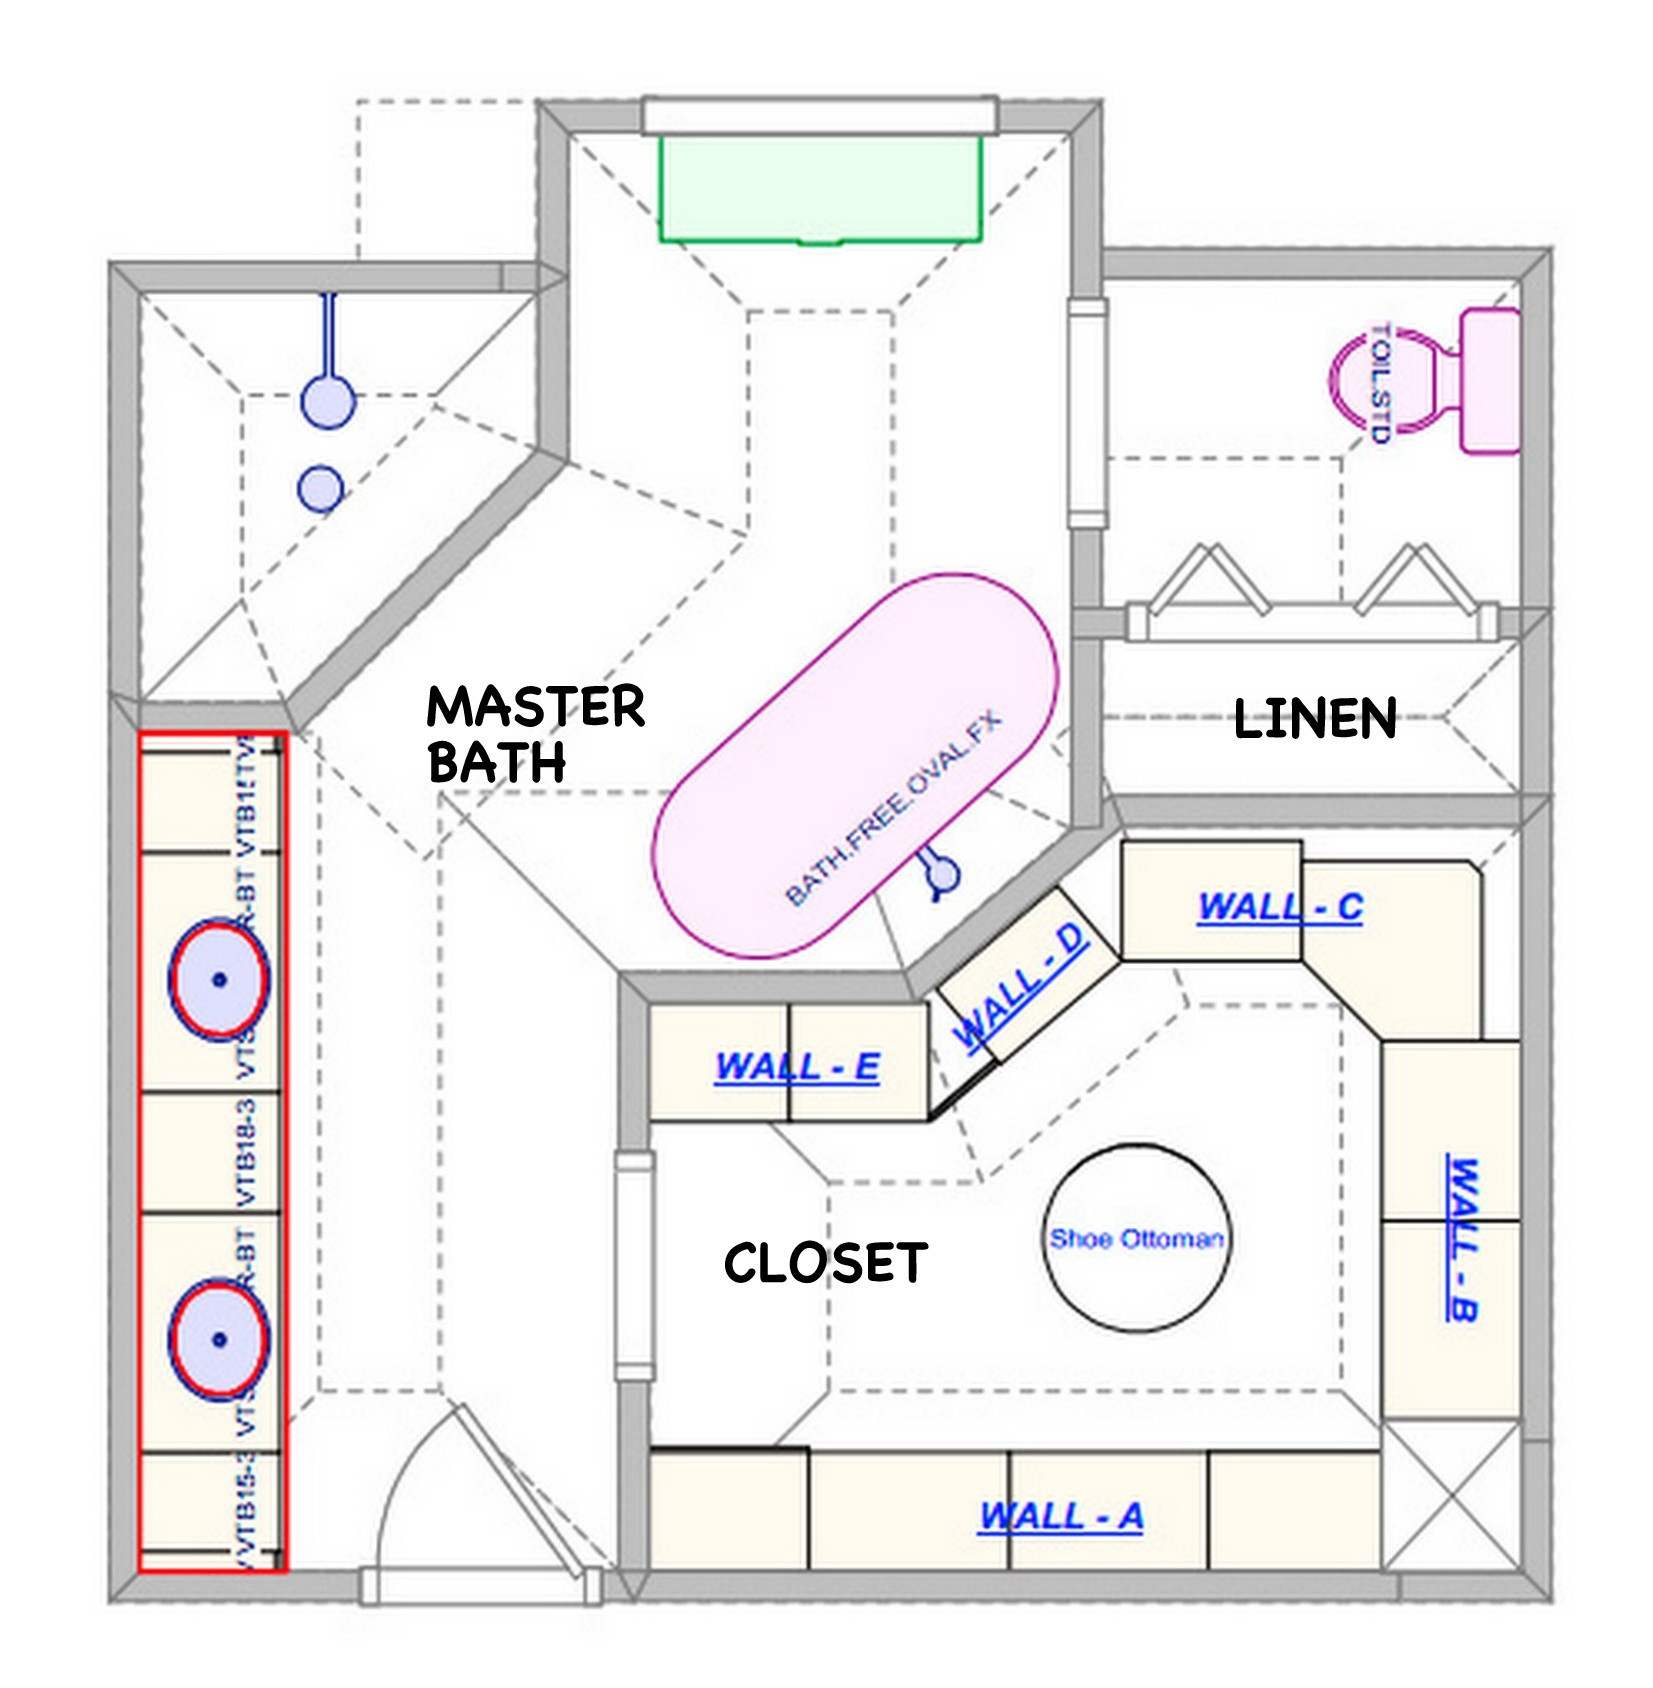 Master Bathroom Floor Plans
 23 Master Bedroom Plans With Bath Ideas That Optimize